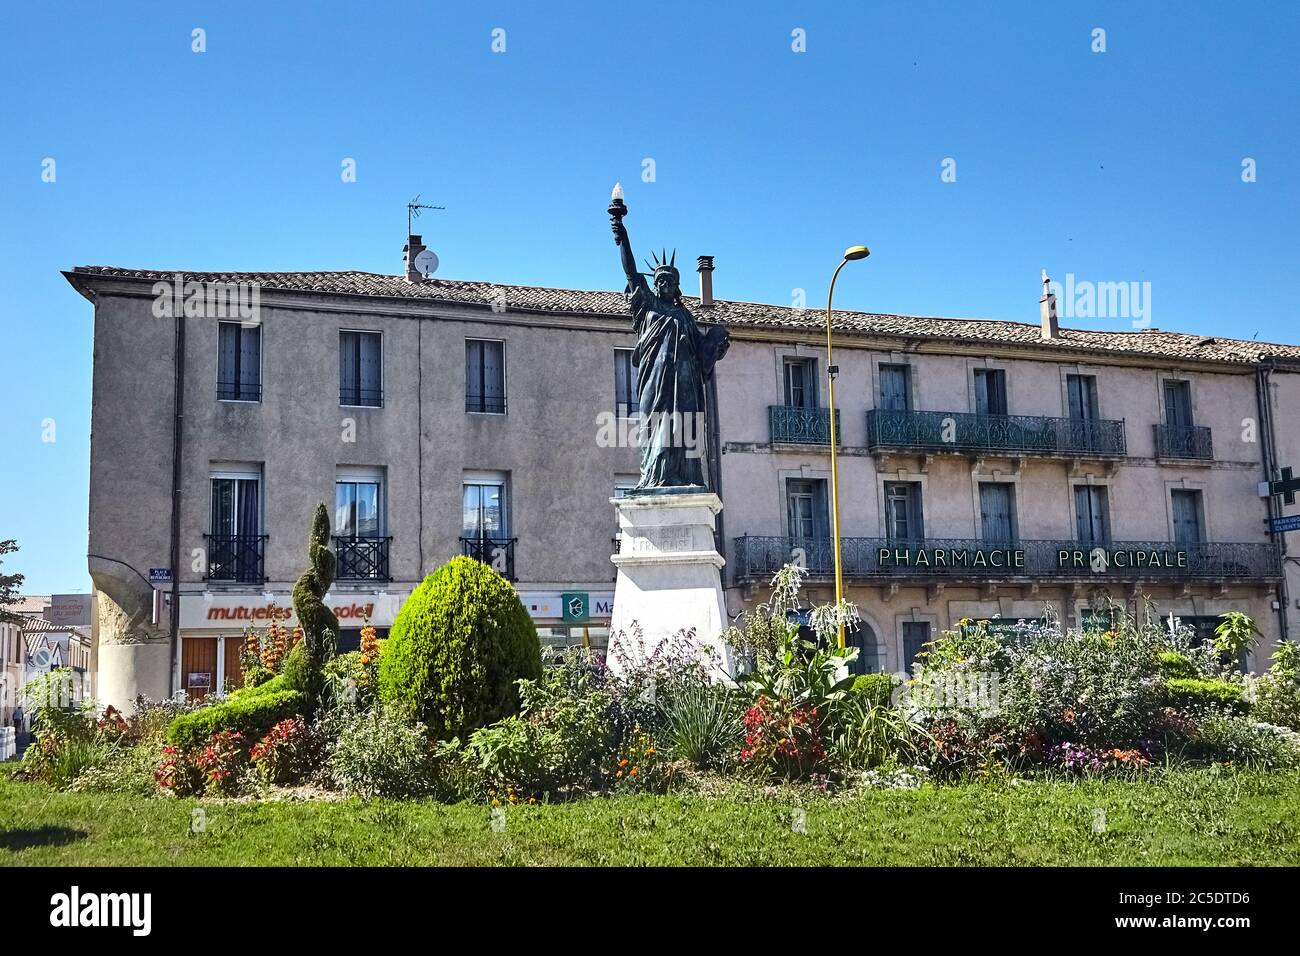 Lunel, France - June 24, 2015: Small replica of the Statue of Liberty of Auguste Bartholdi on the Place de la Republique Stock Photo